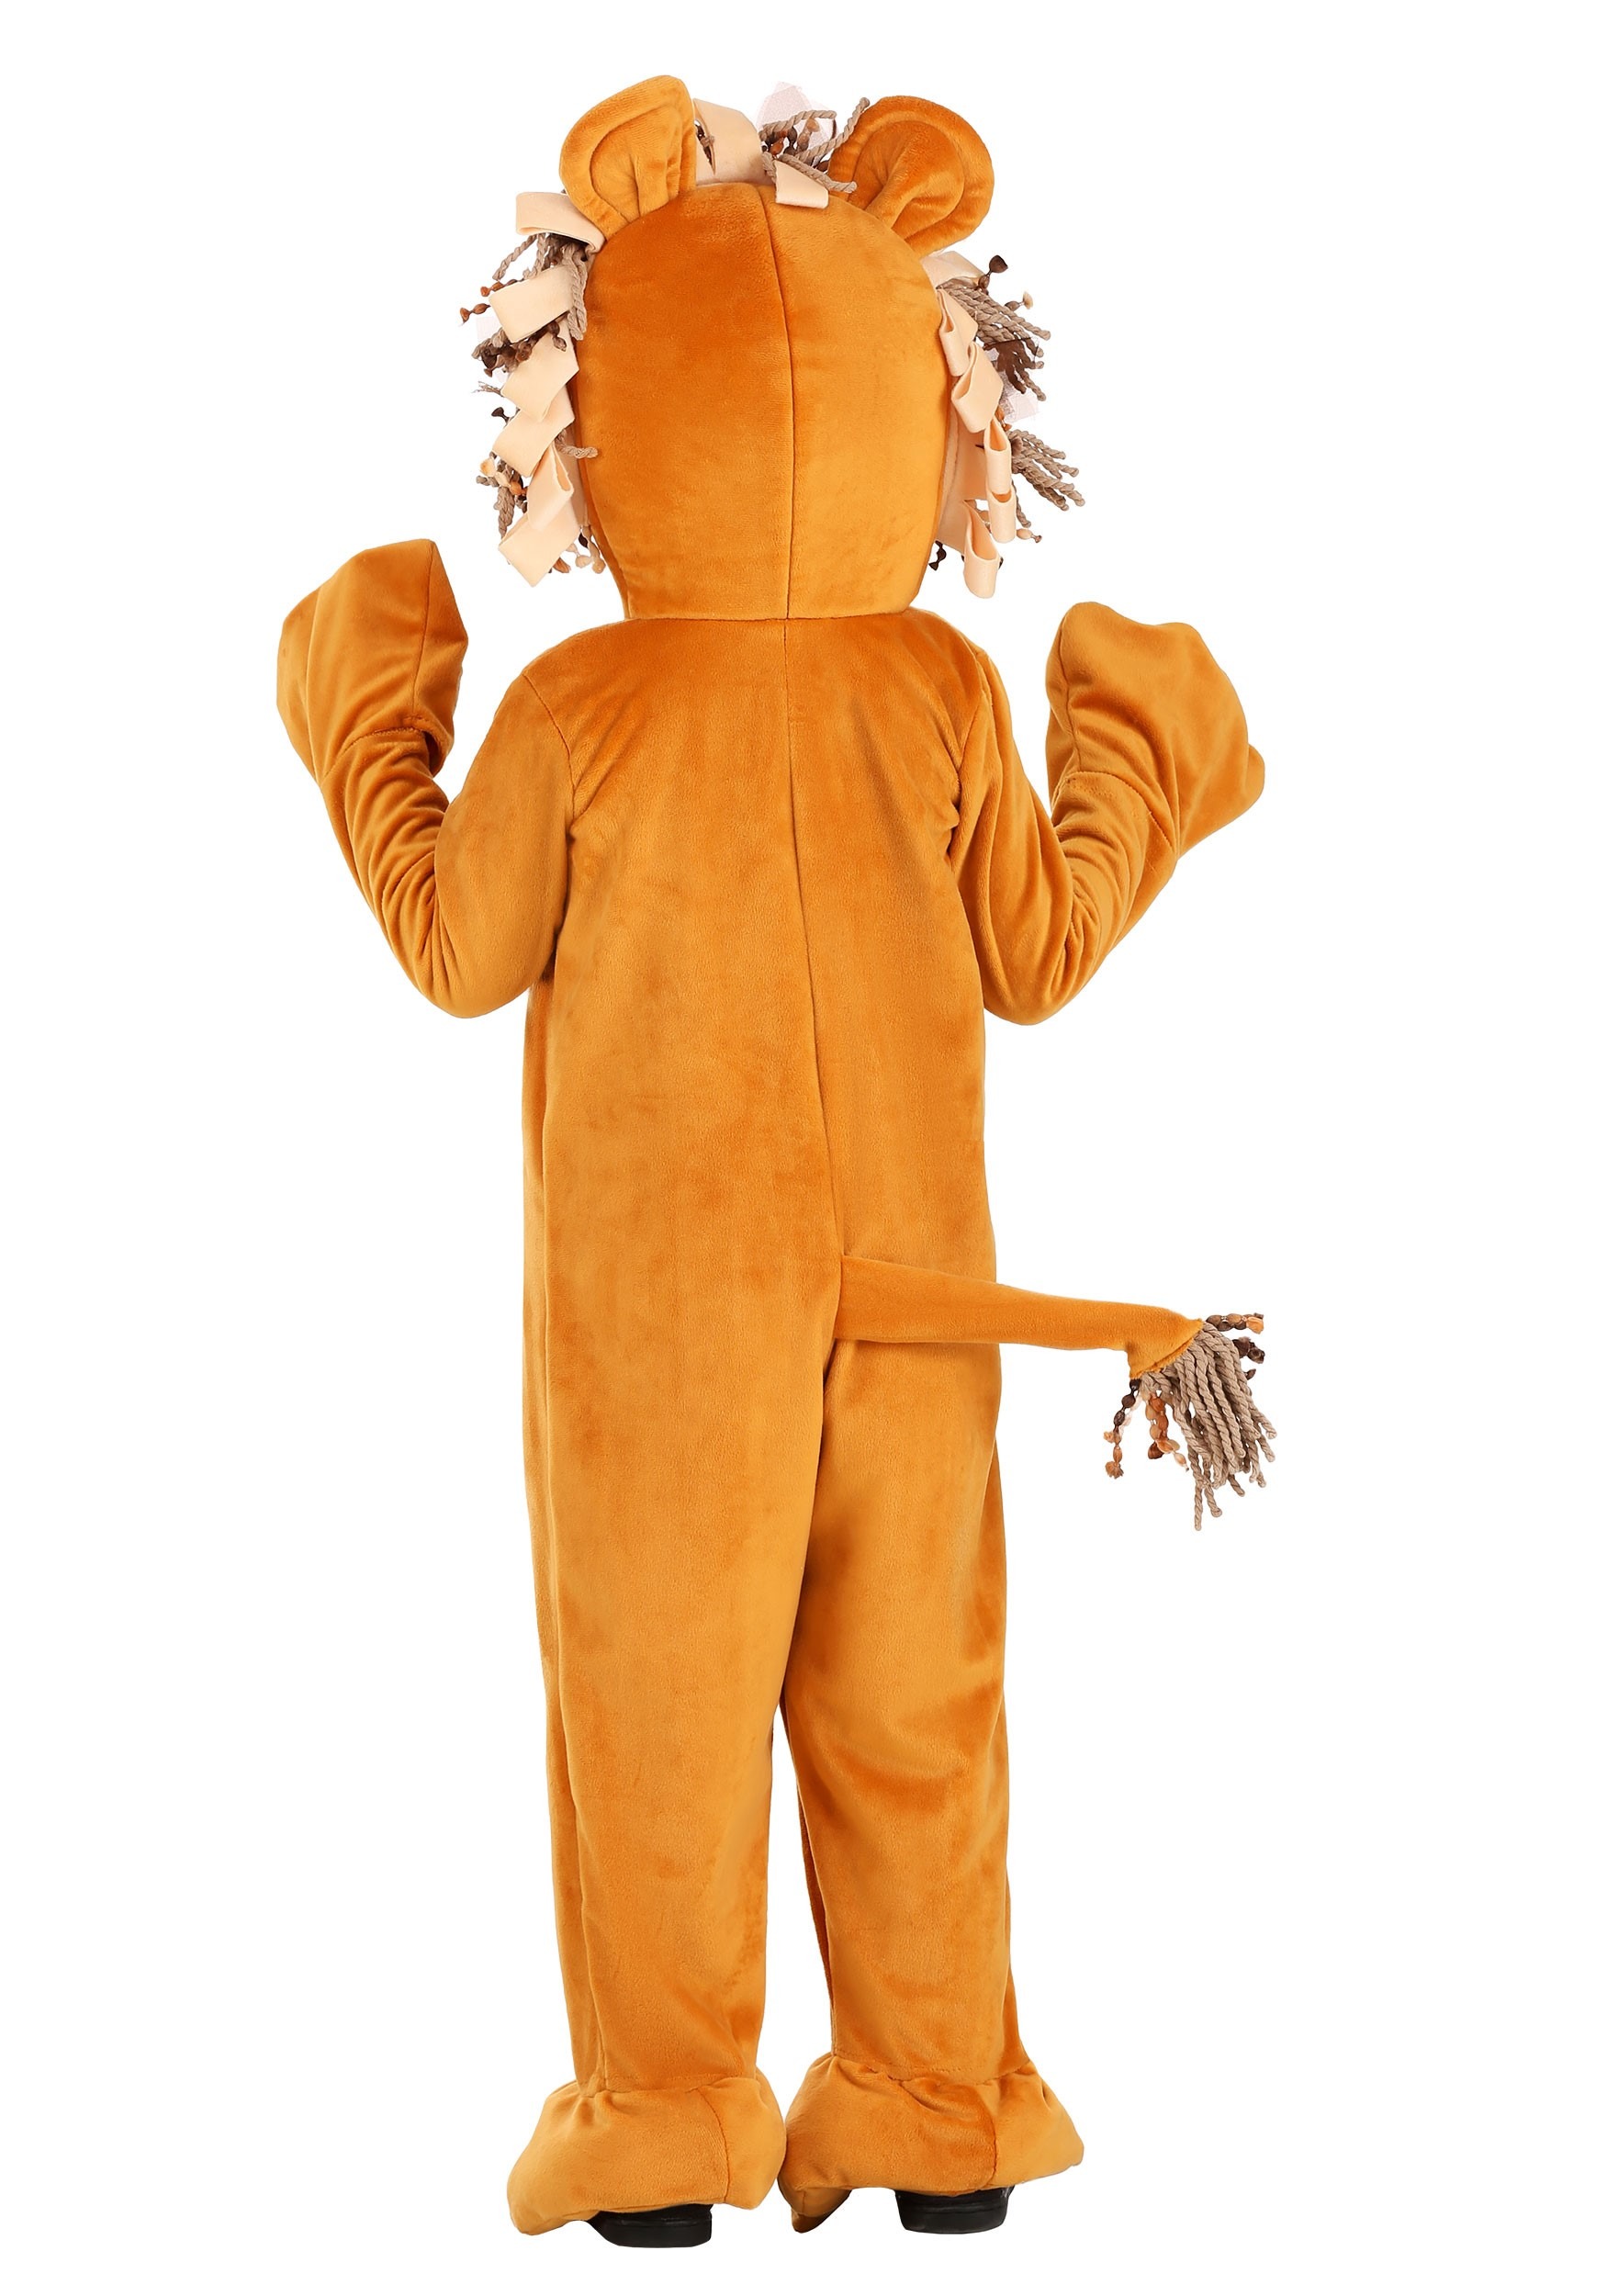 Roaring Lion Kid's Costume